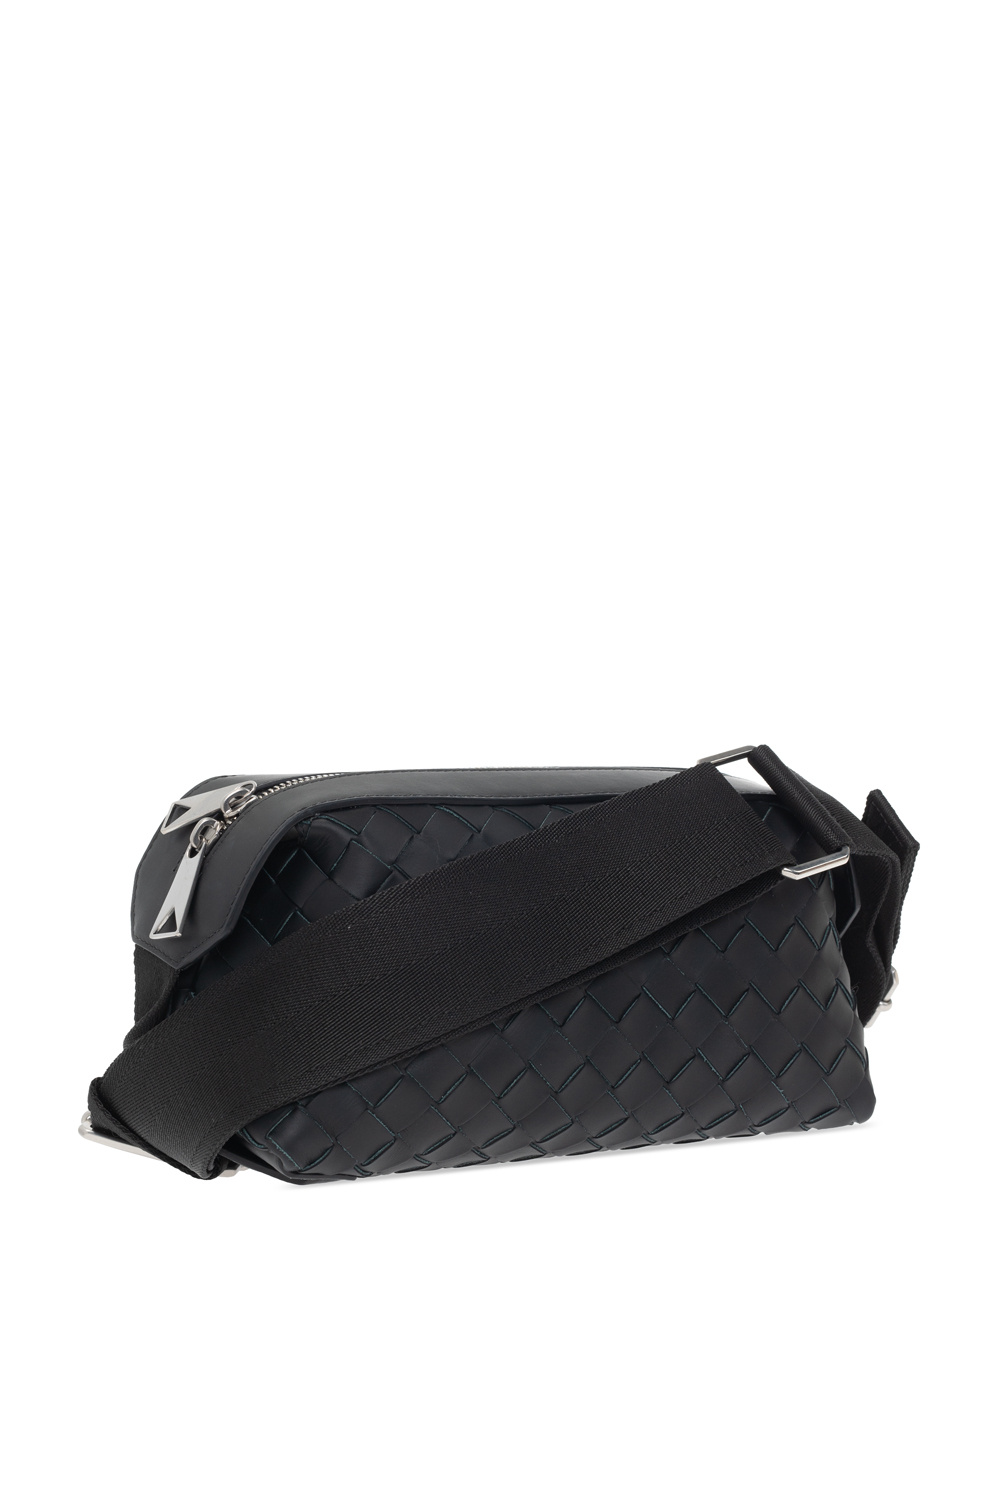 bottega Coat Veneta Shoulder bag with ‘Intrecciato’ weave